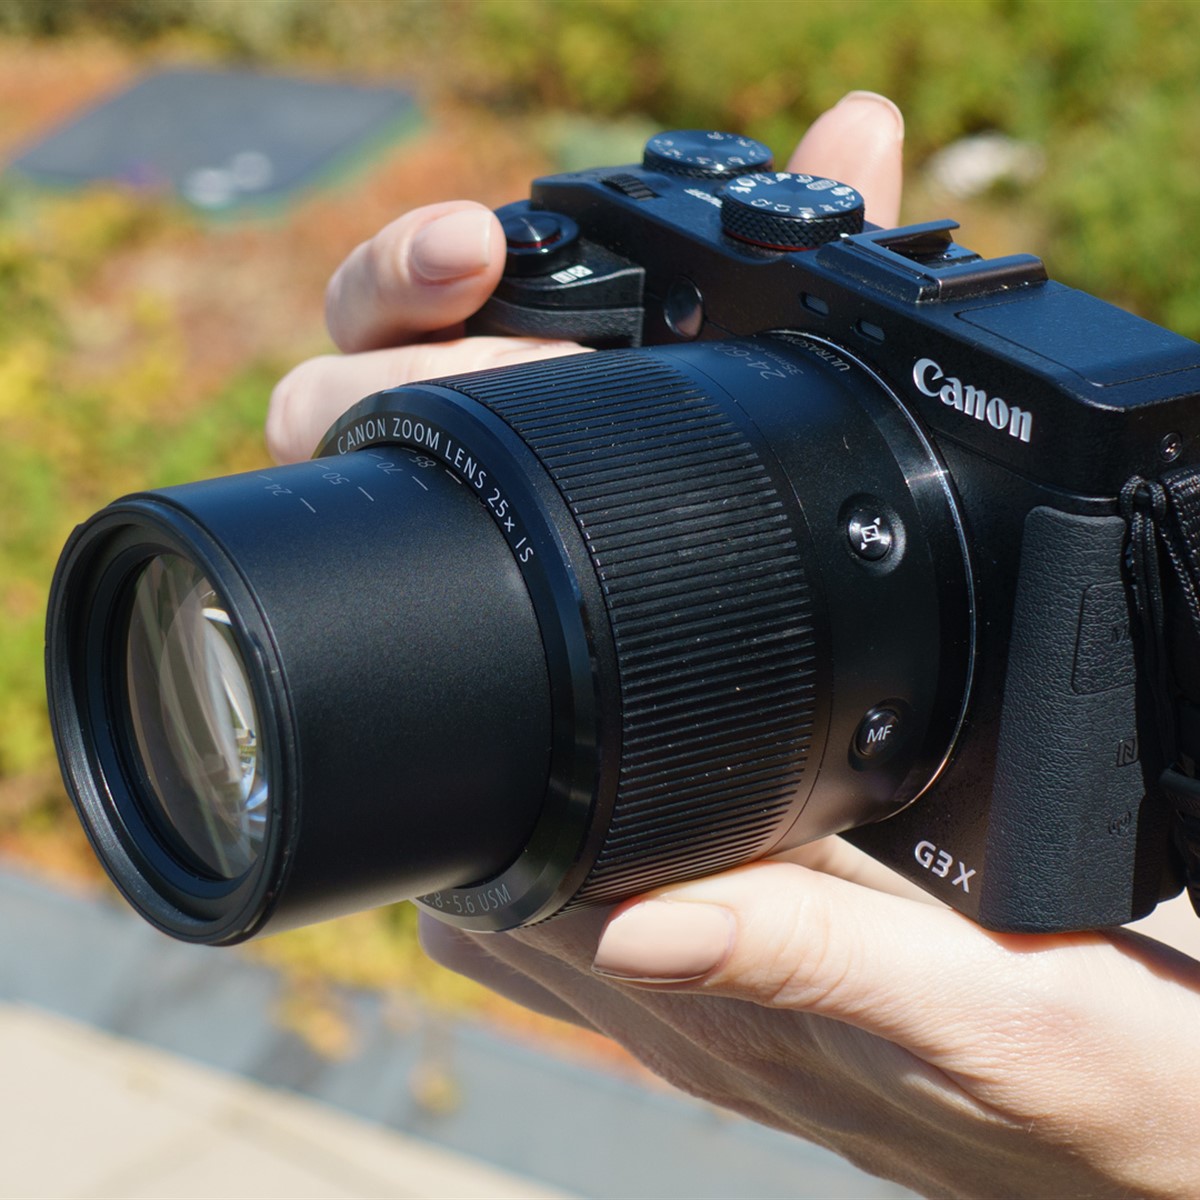 Canon PowerShot G3 X: كاميرا صغيرة الحجم مزودة بمستشعر مقاس 1 بوصة